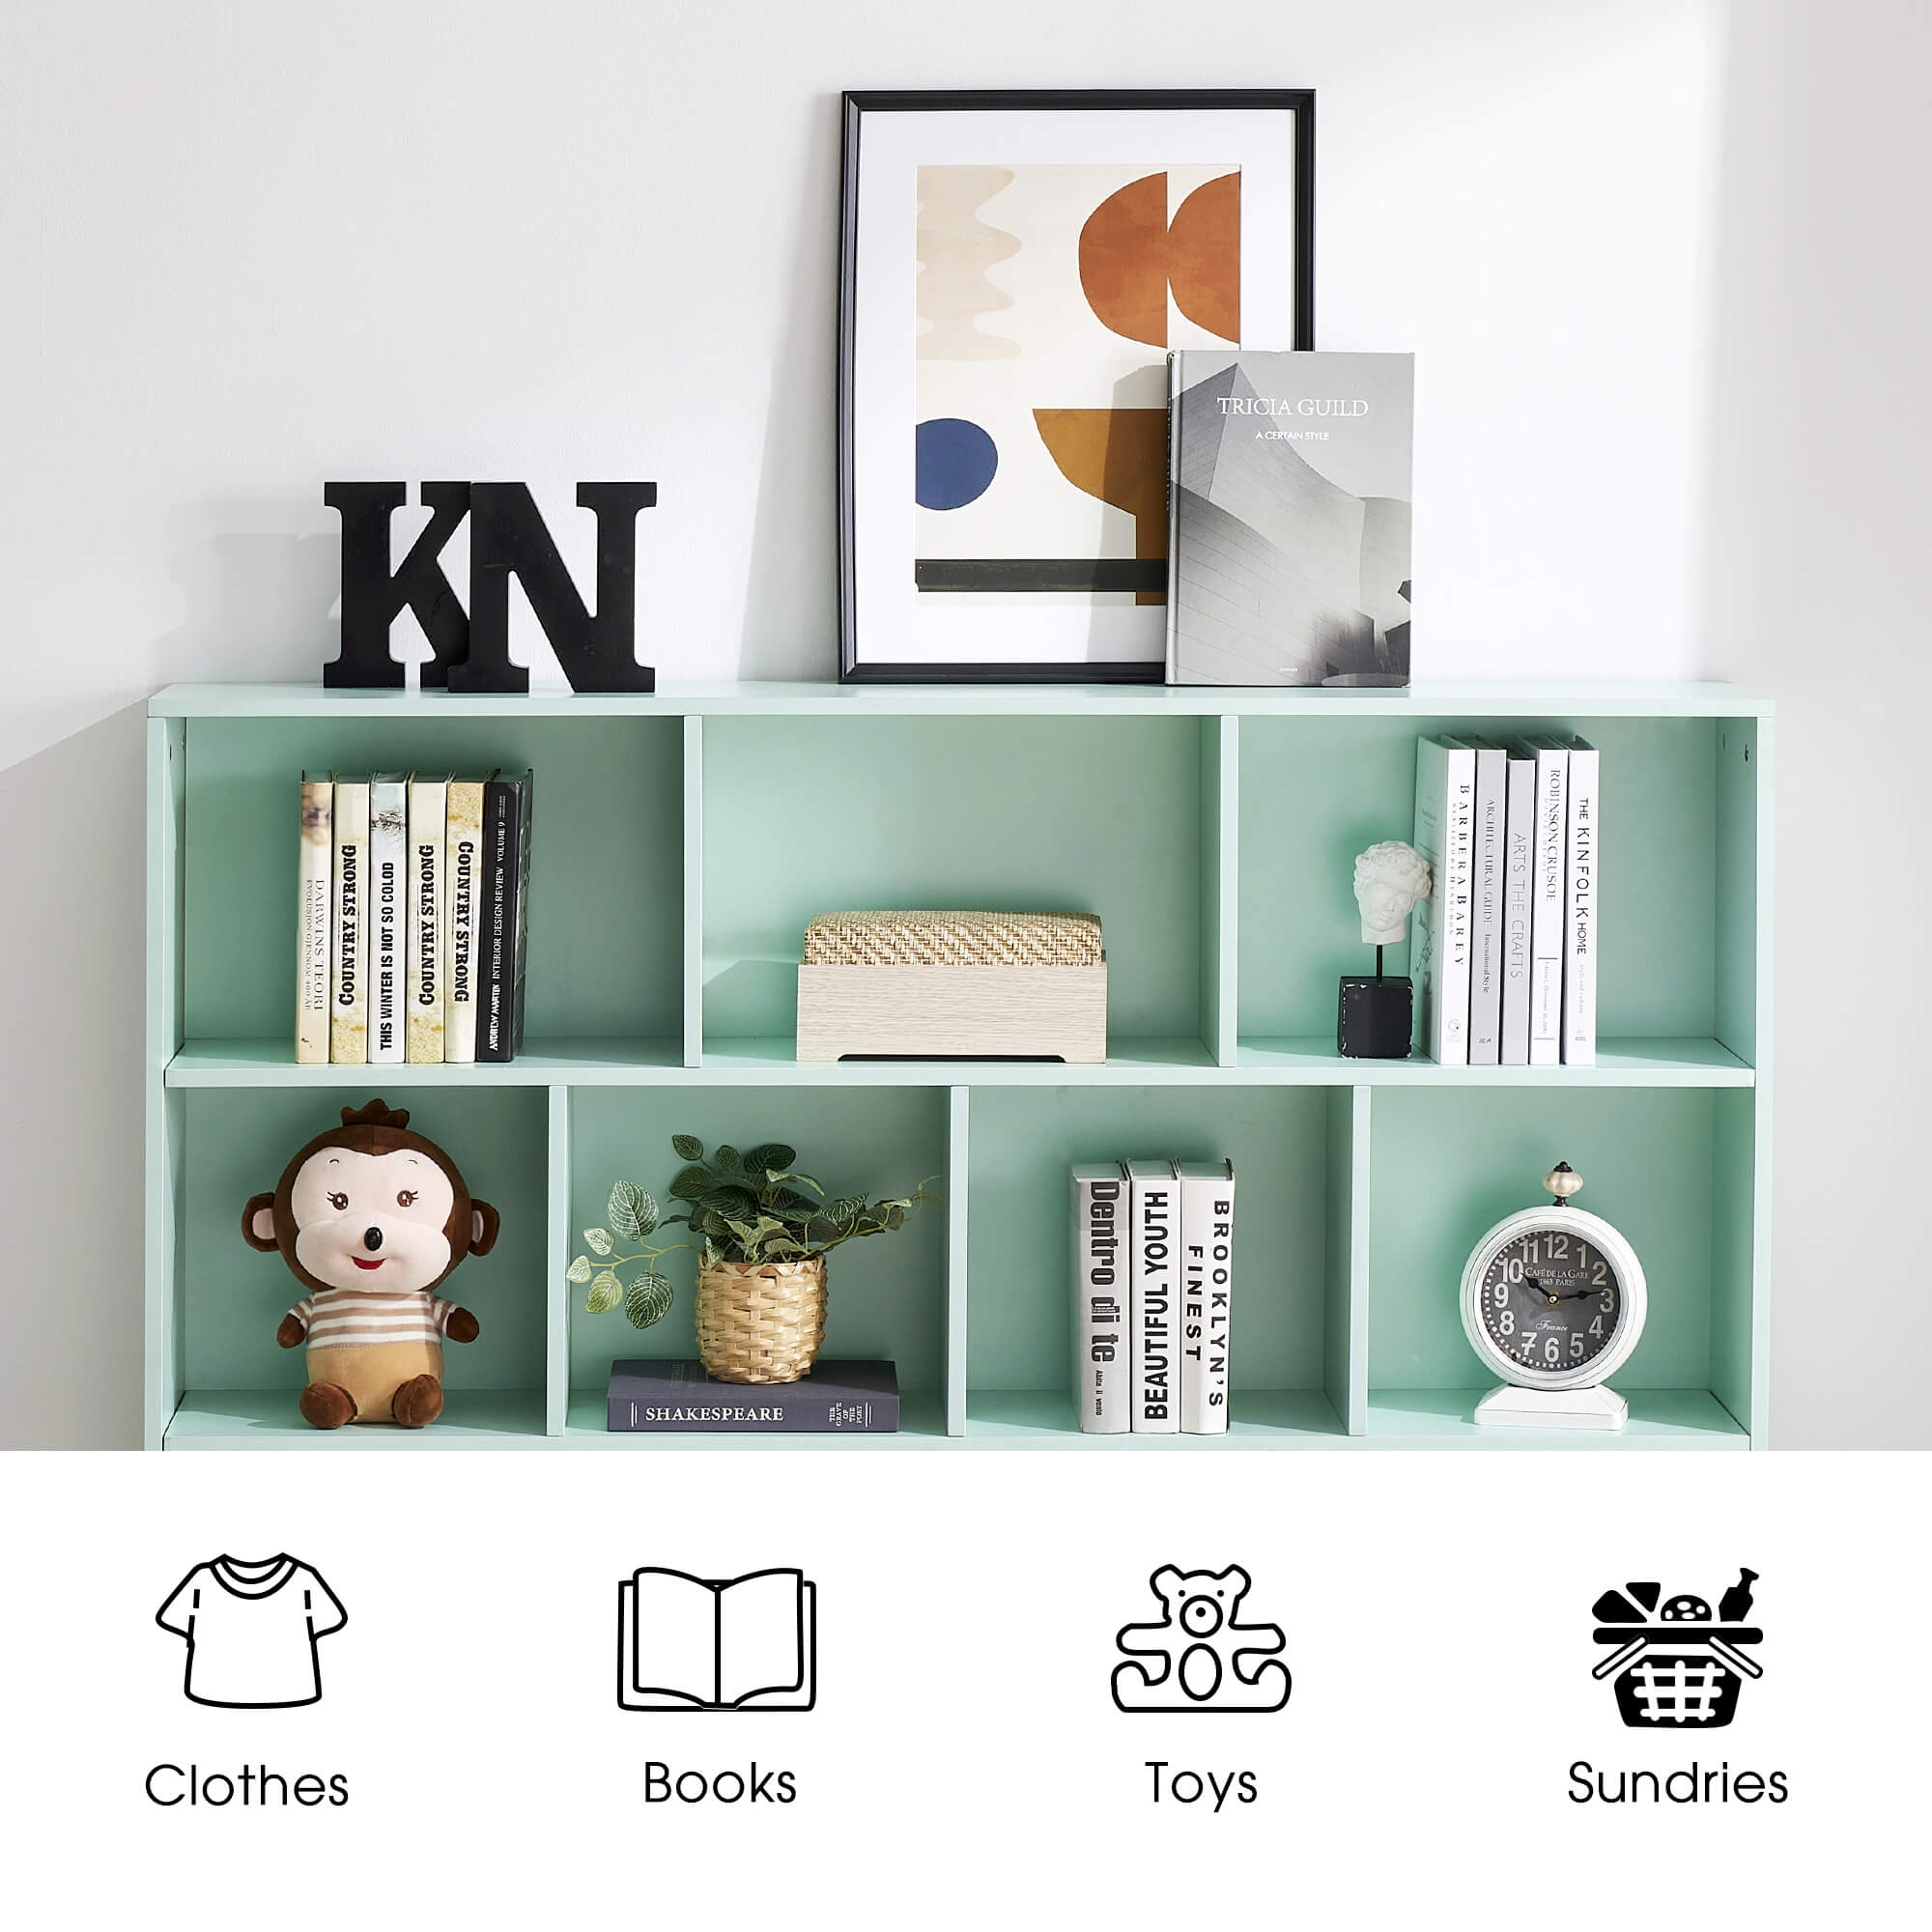 Ivinta 3-Tier Storage Bookcase for Kids, Simple Wood Display Cabinet for Bedroom